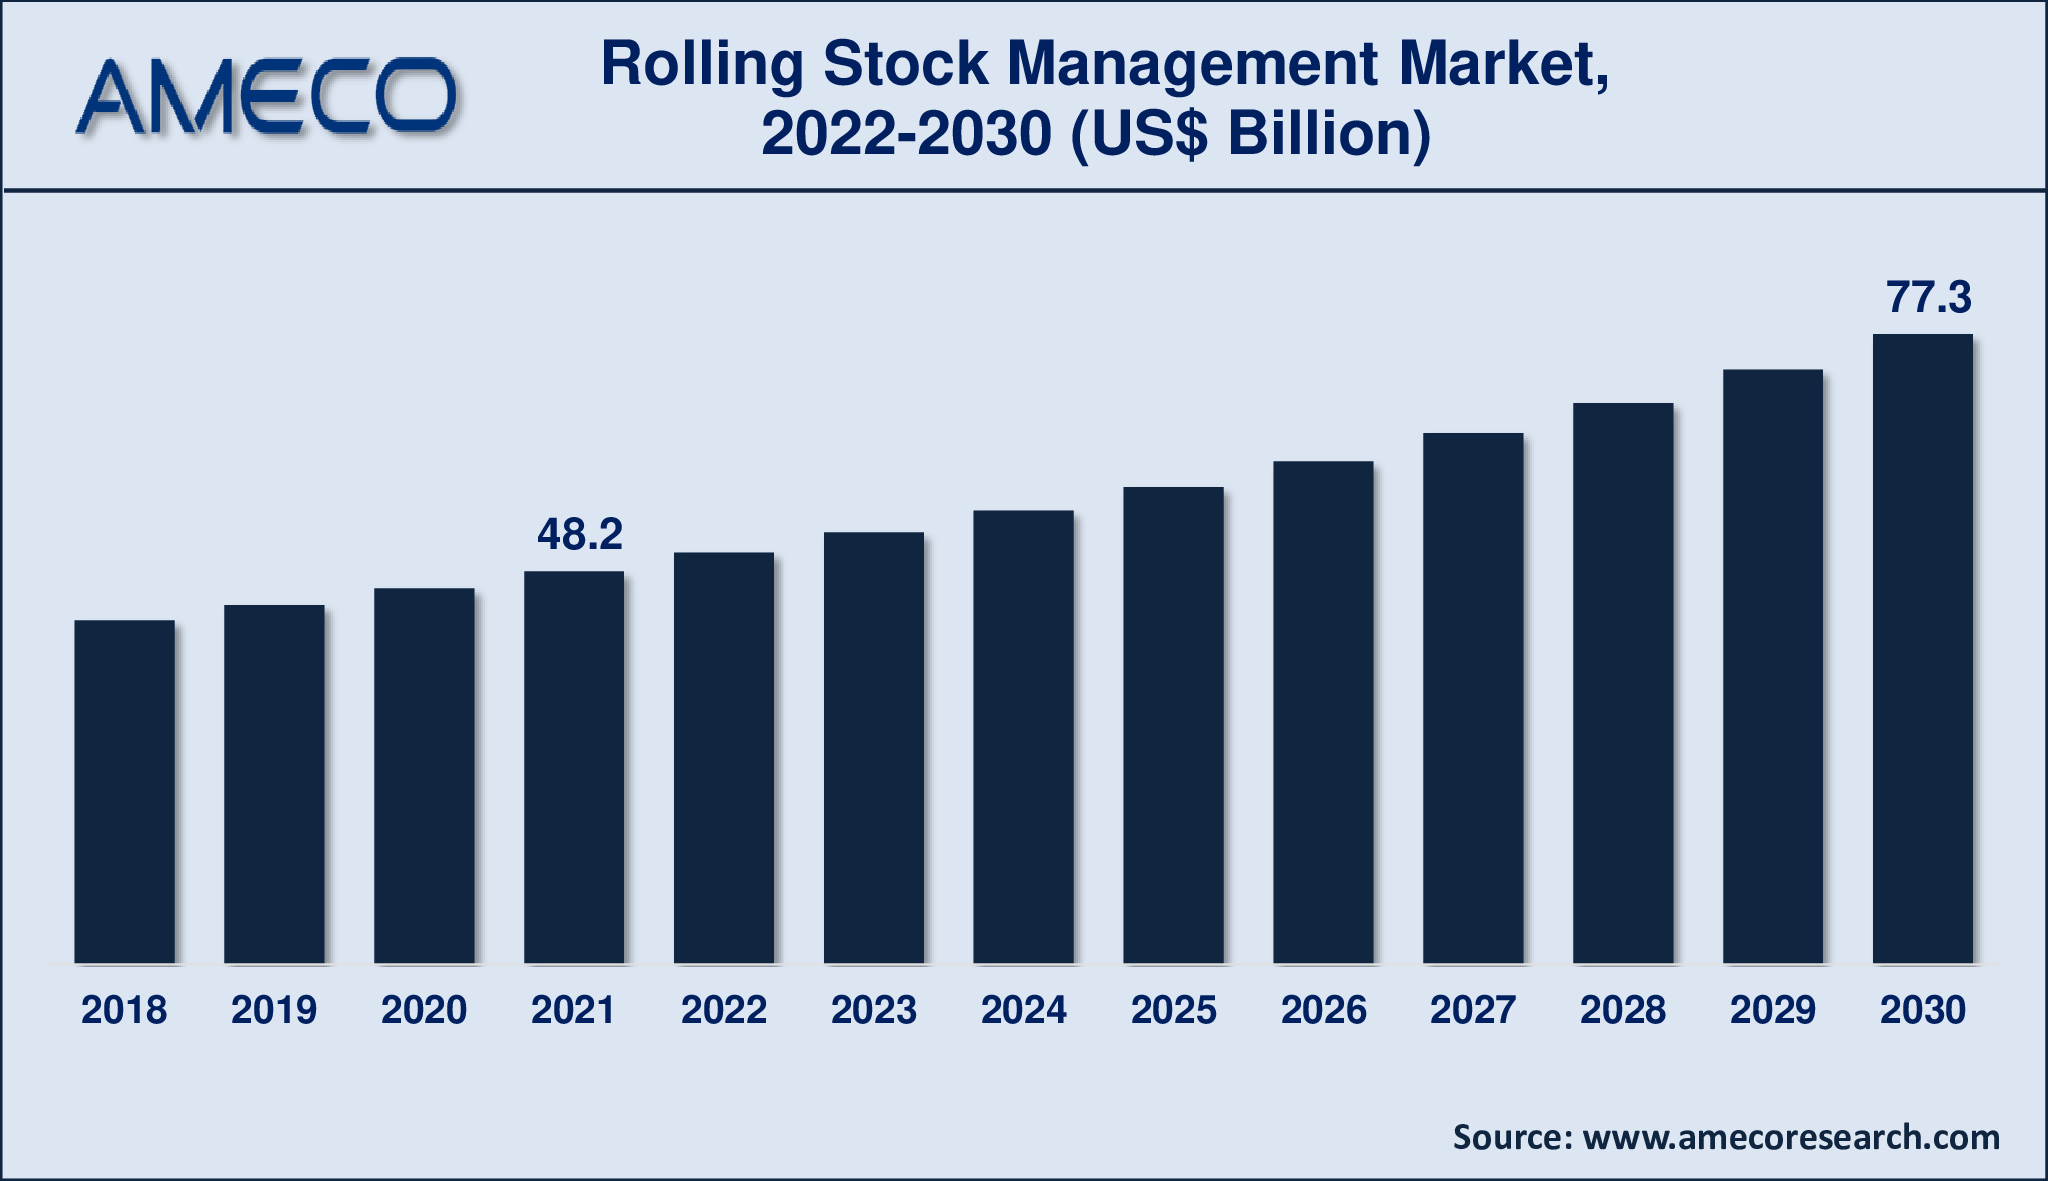 Rolling Stock Management Market Value